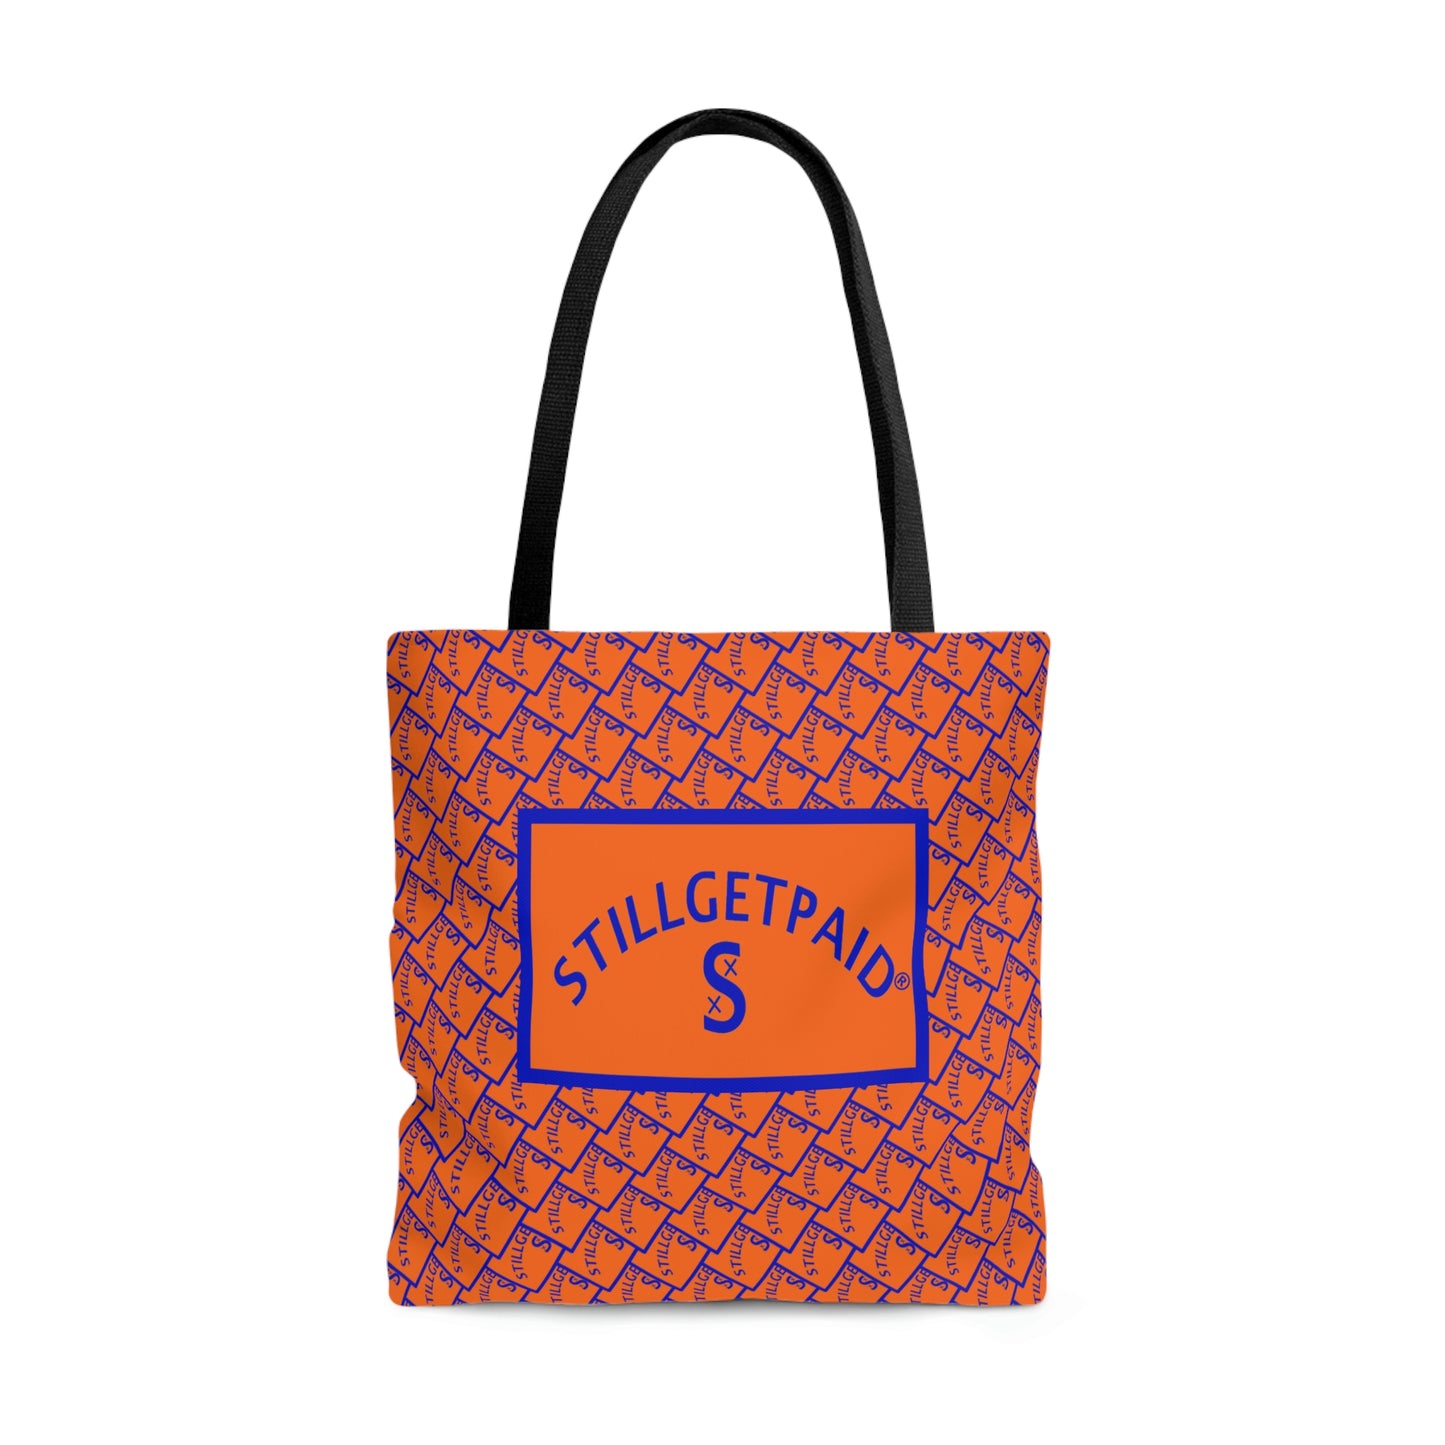 STILLGETPAID® APPAREL ORANE BIG Tote Bag